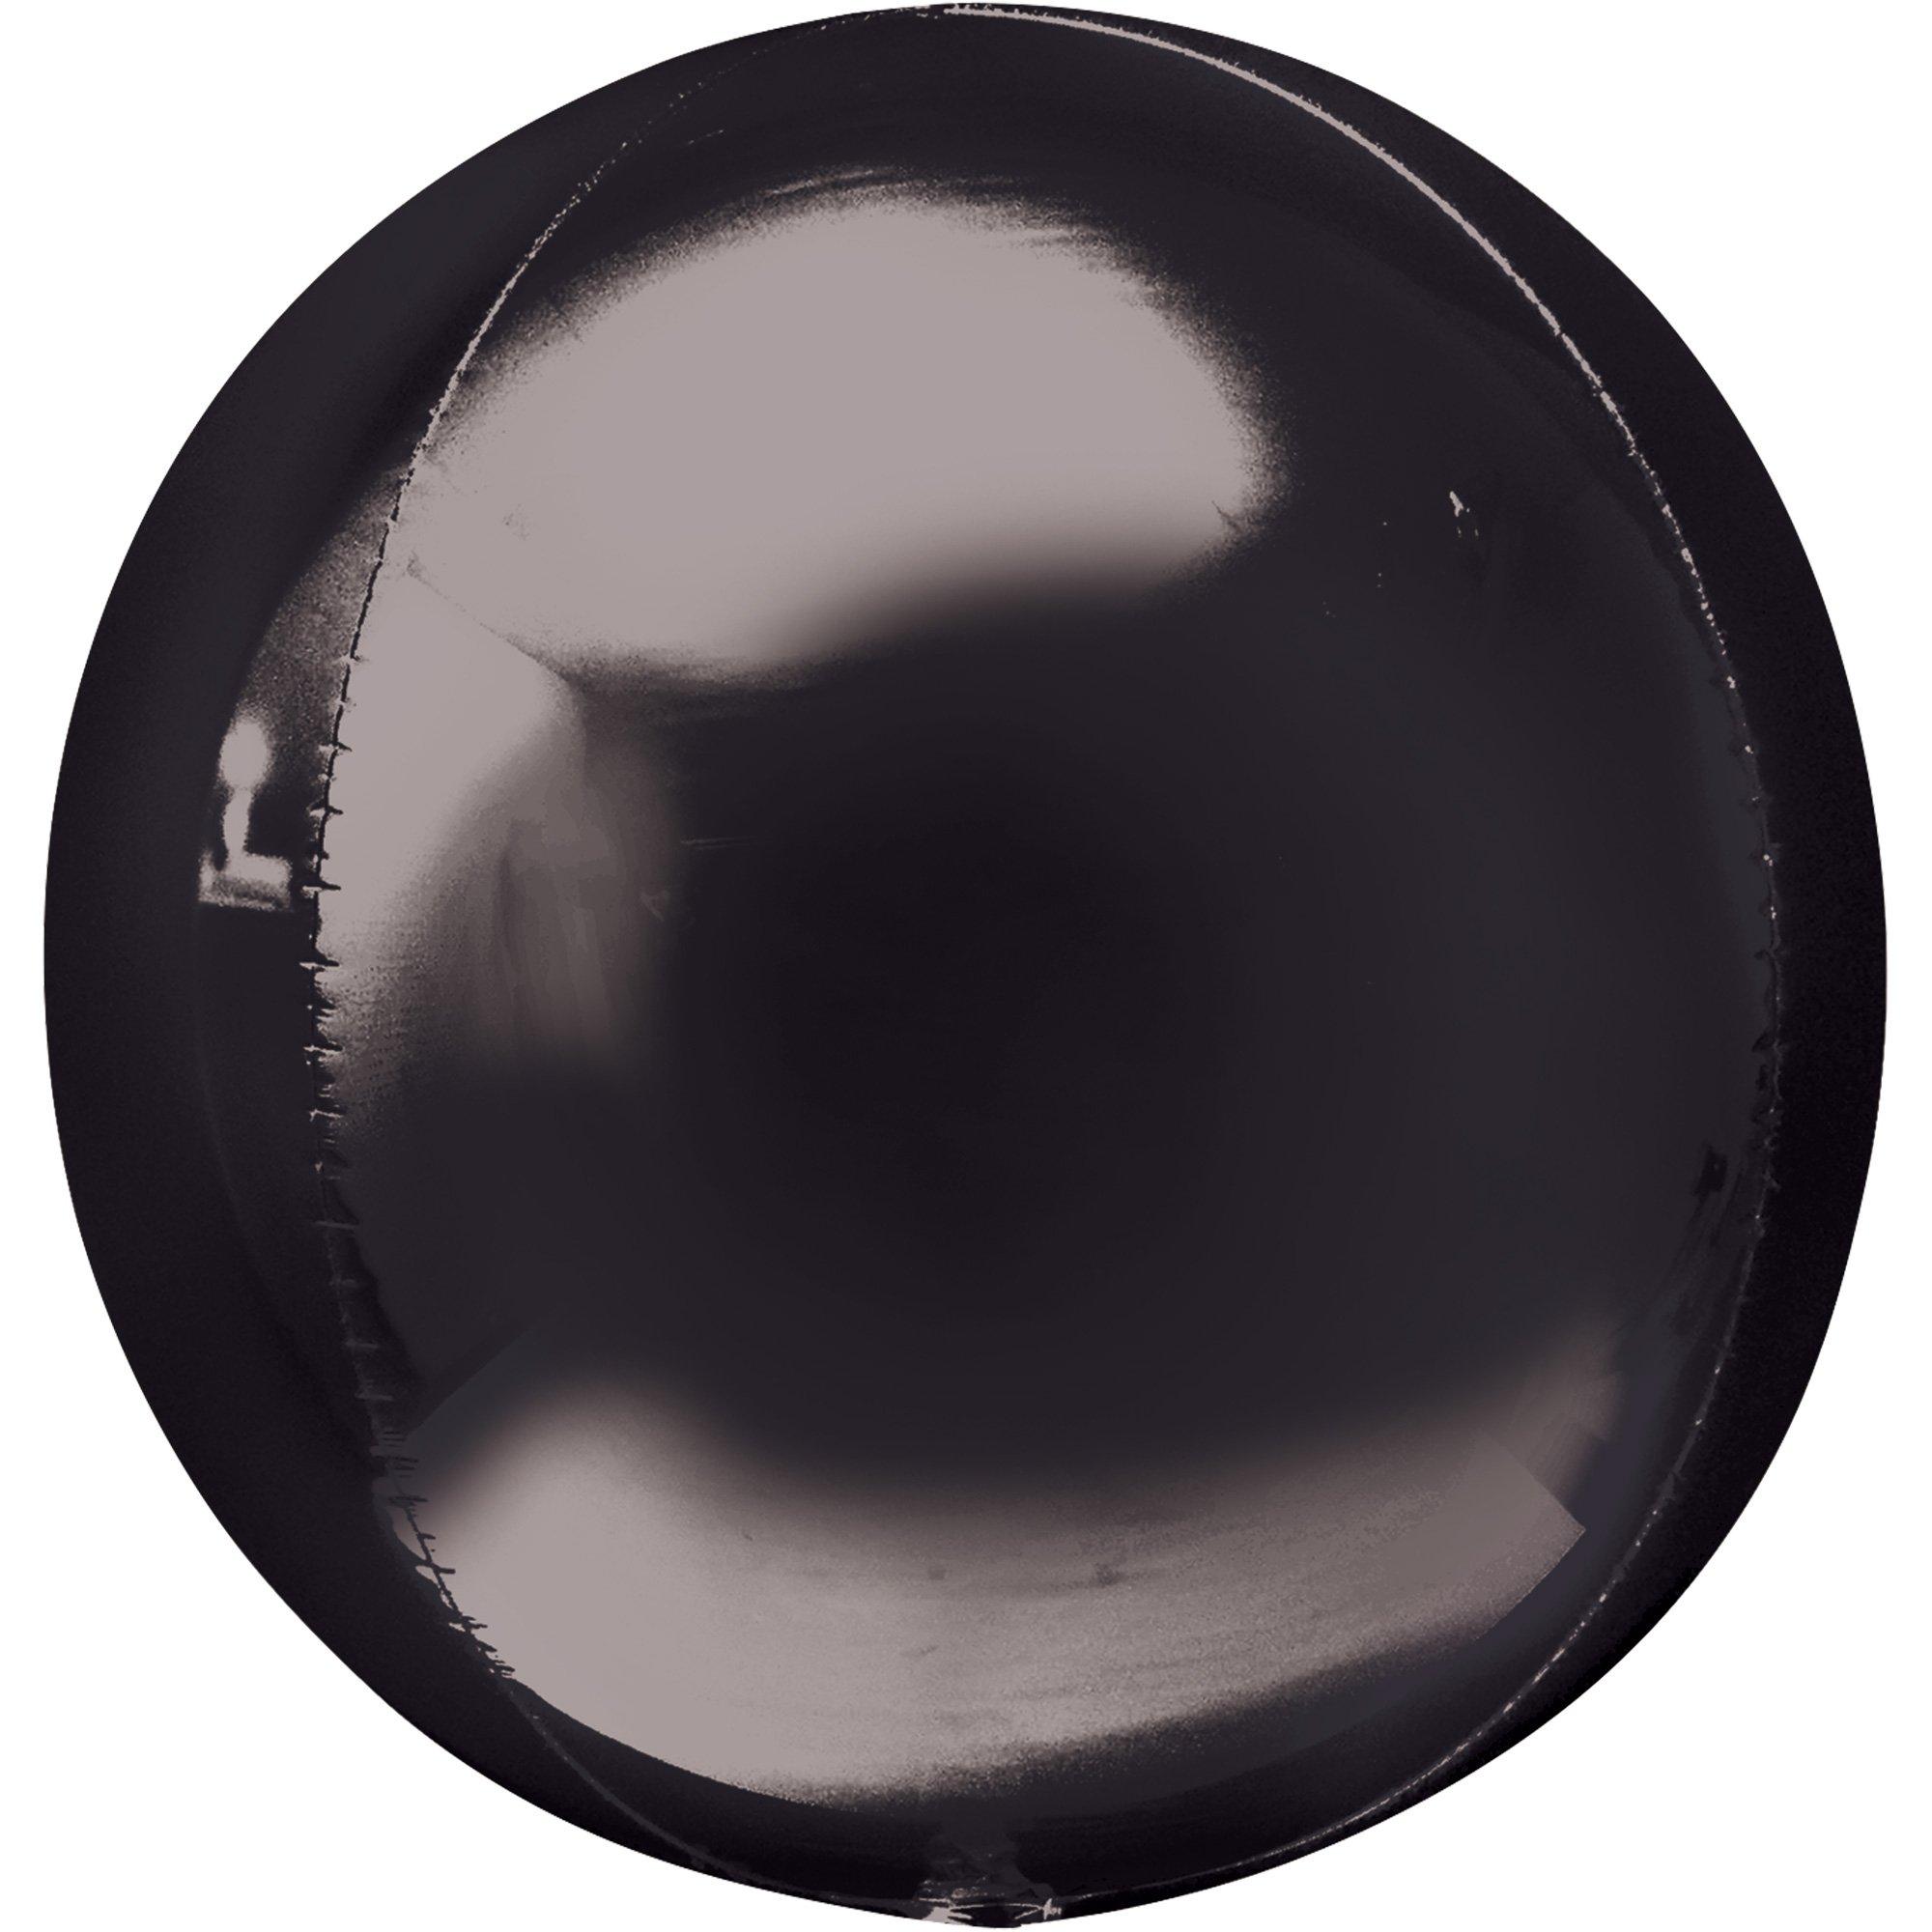 Ballon orbz platine 38 cm - Grabo par 5,75 €